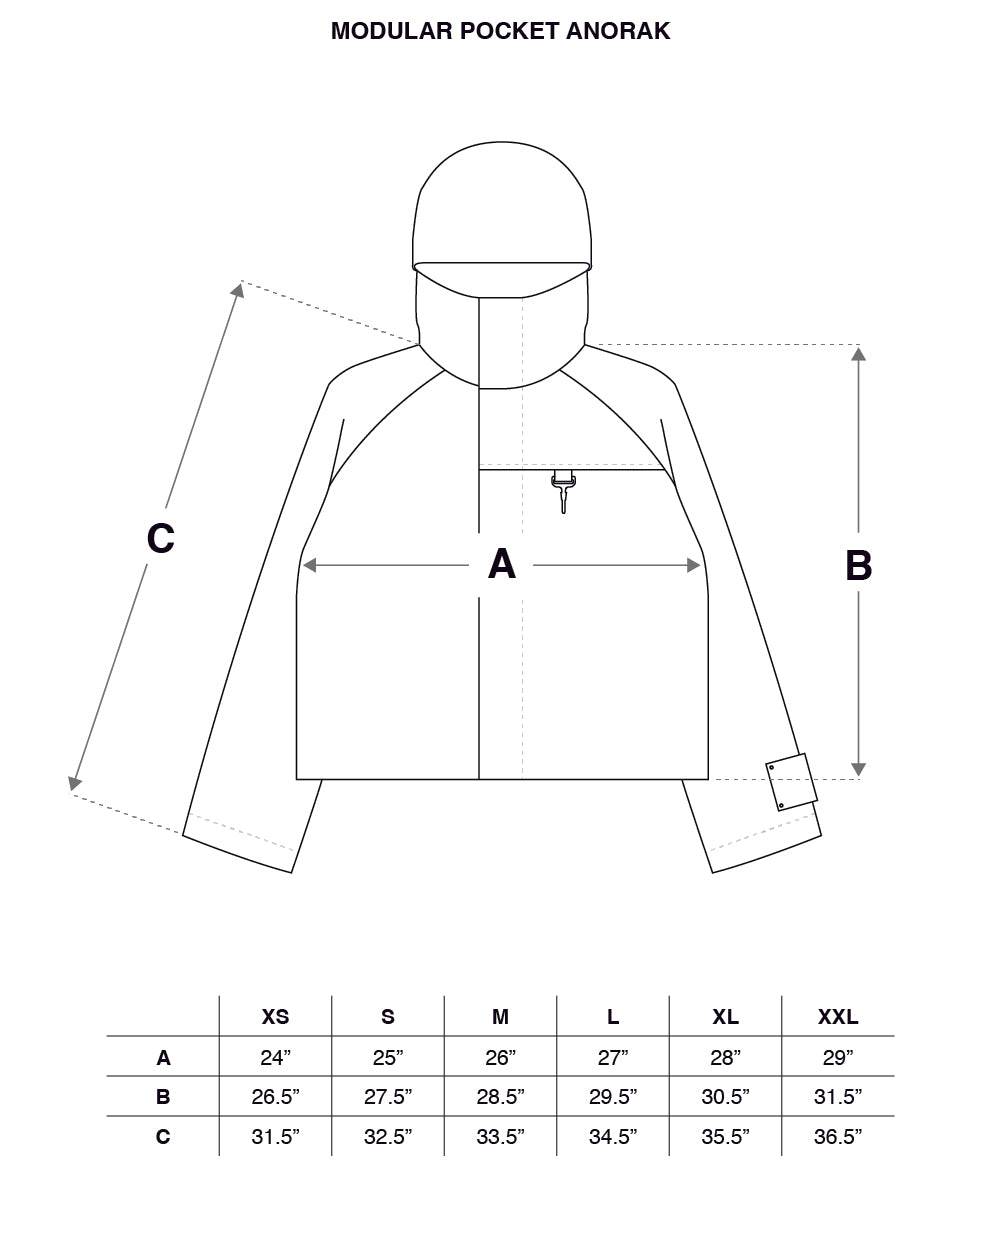 Modular Pocket Cotton Ripstop Anorak in Camo Size Guide